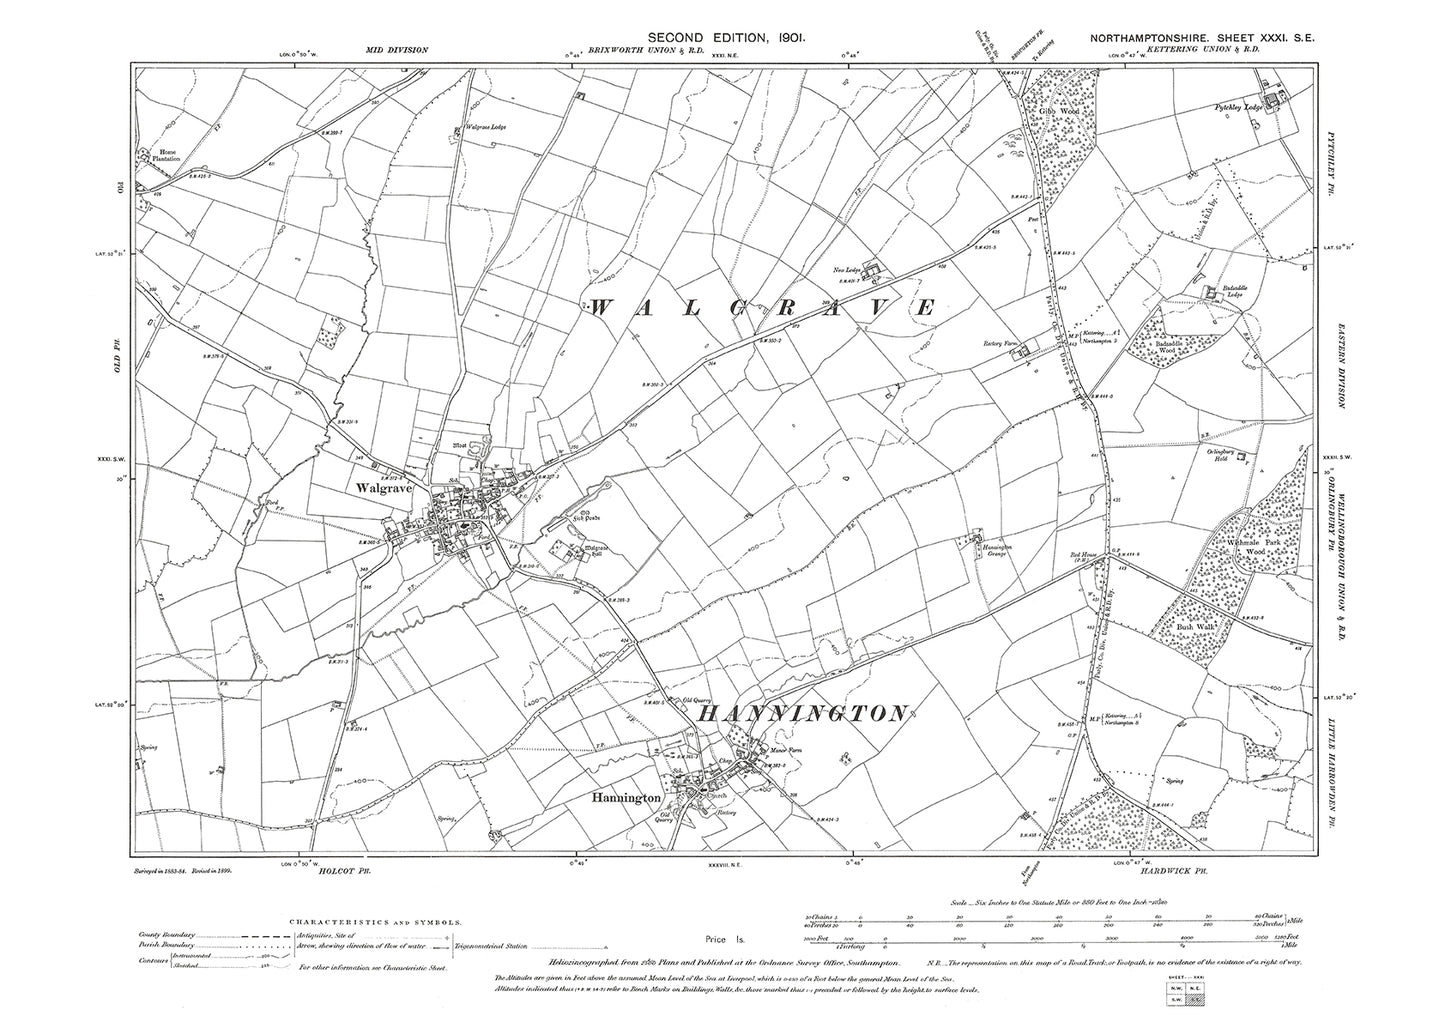 Walgrave, Hannington, Northamptonshire in 1901: 31SE